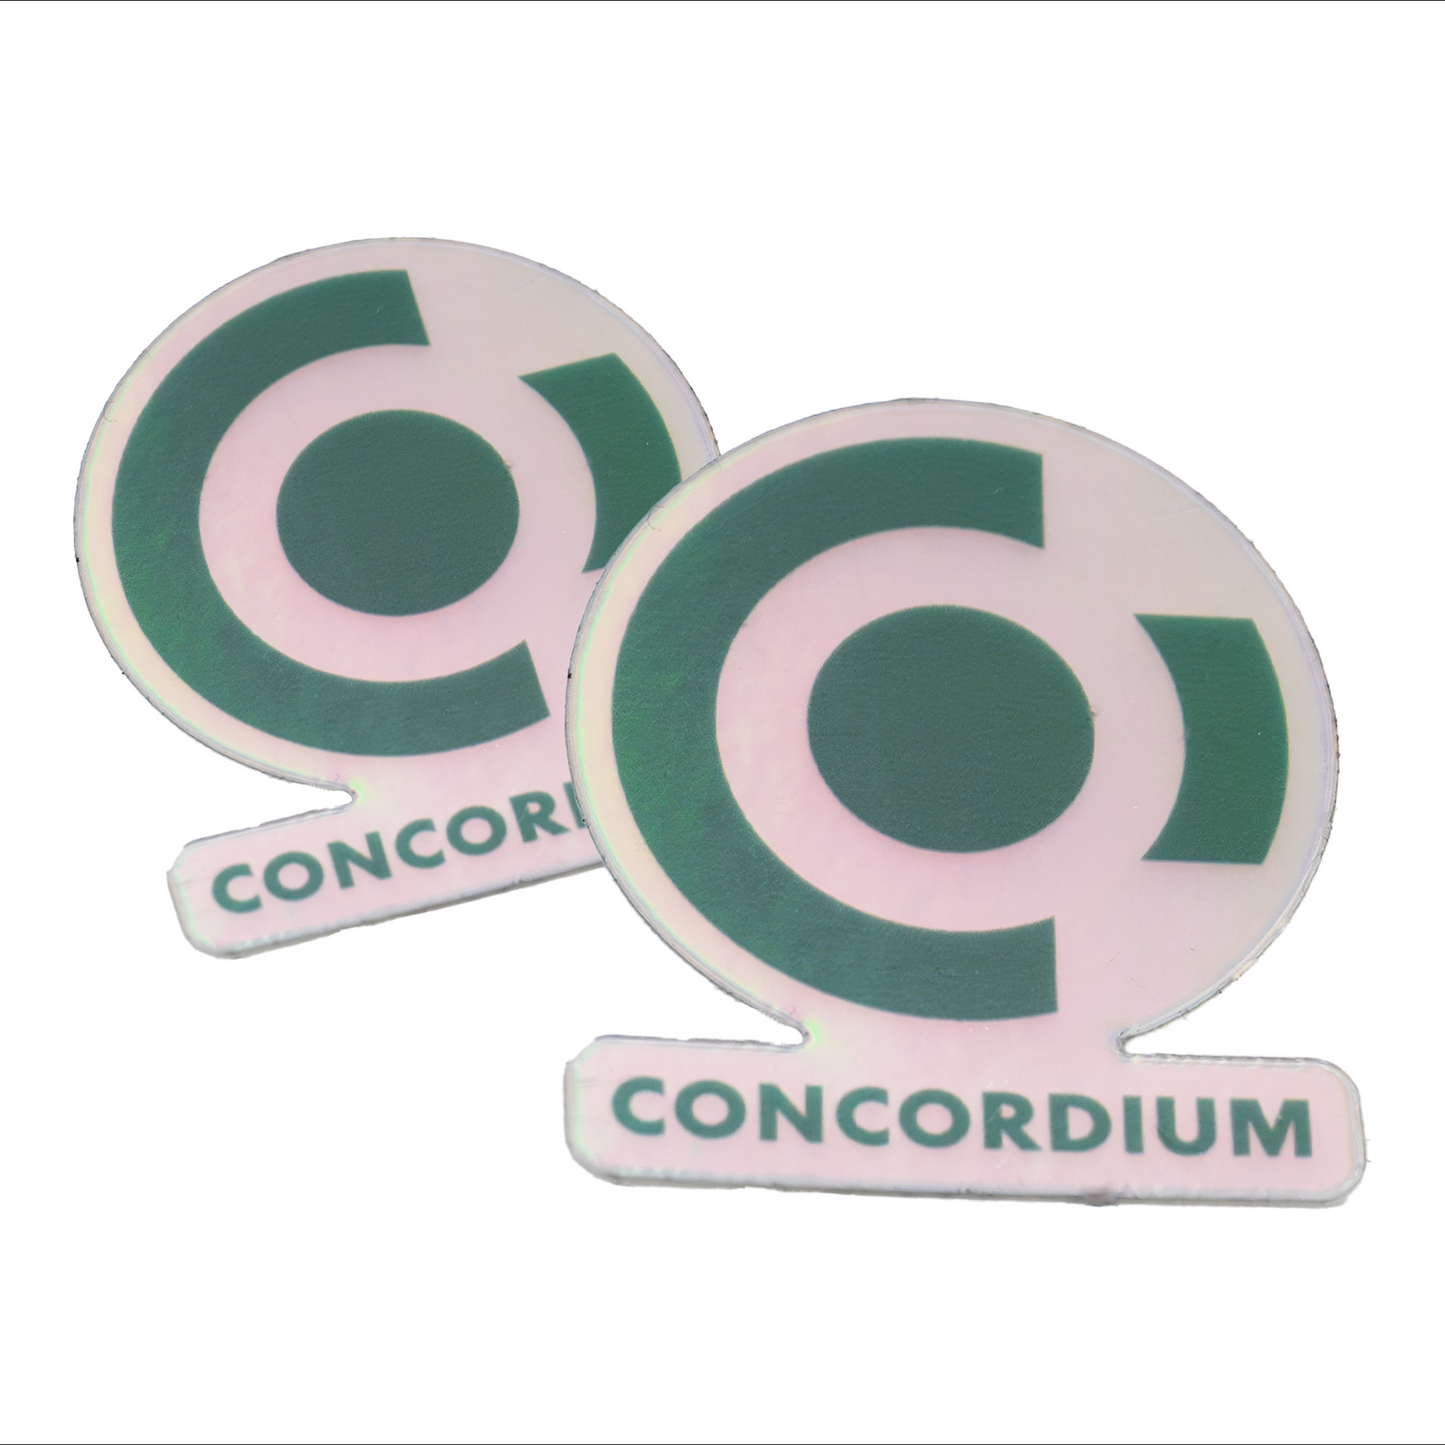 Concordium Holographic Stickers – Multicolored Collection